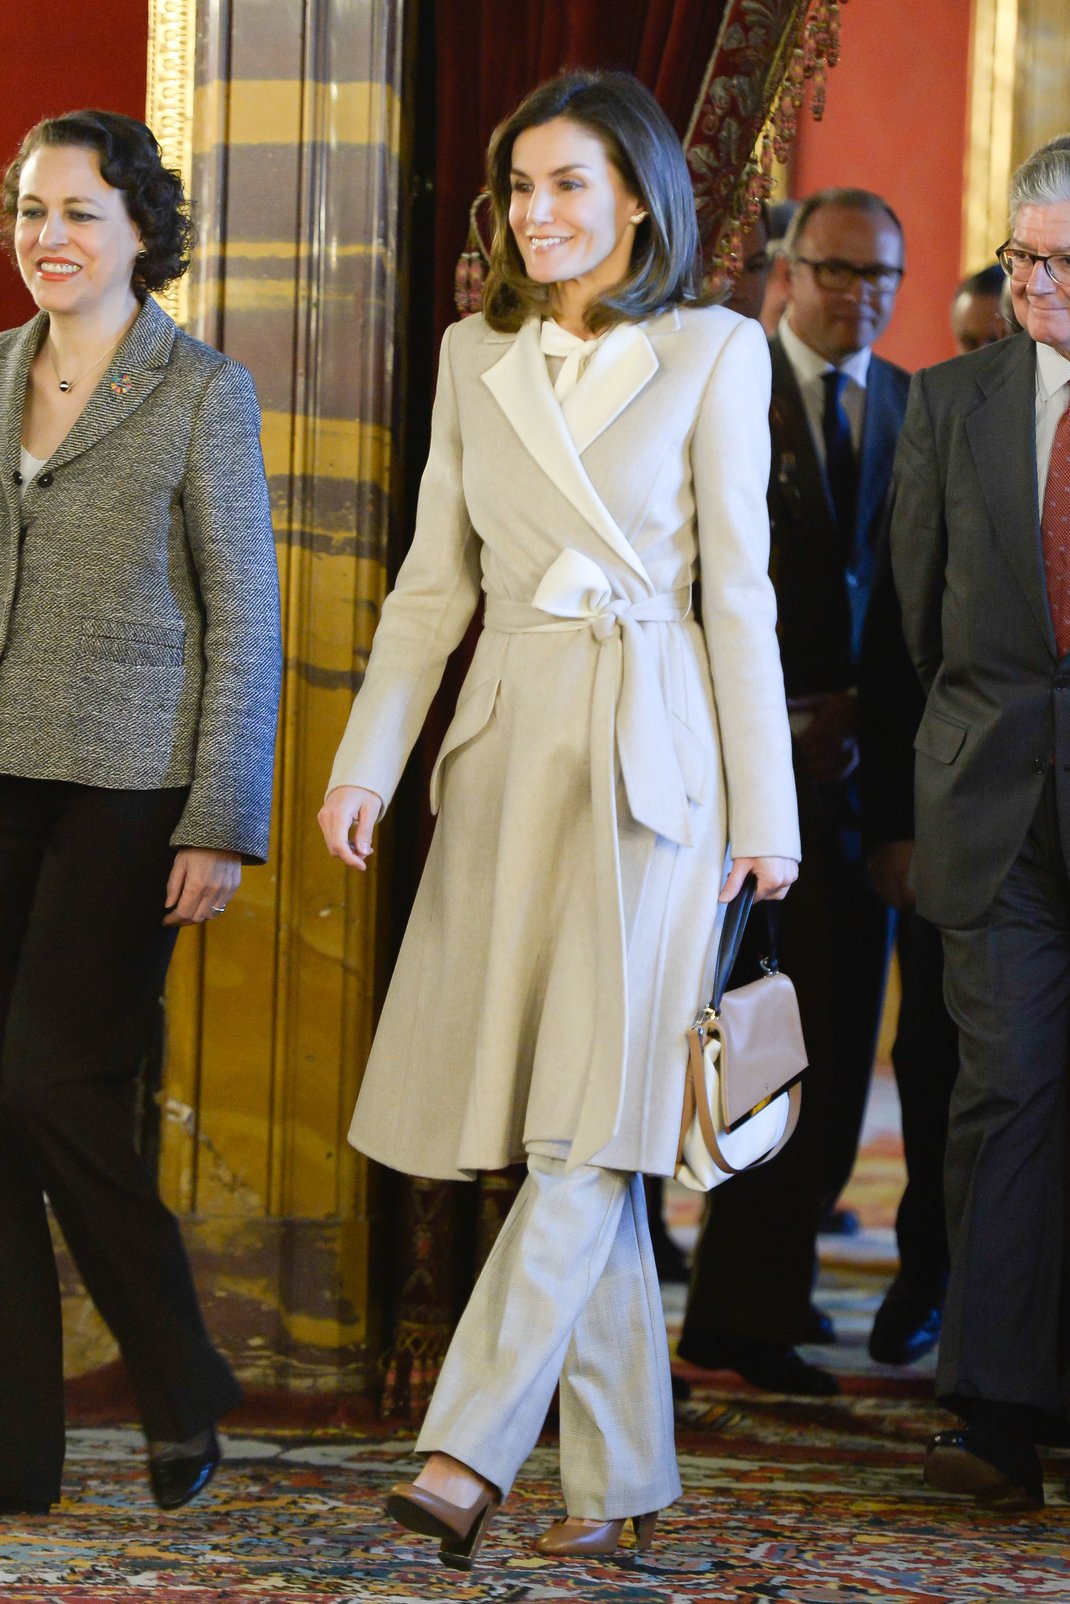 H βασίλισσα Λετίθια περπατά με παλτό